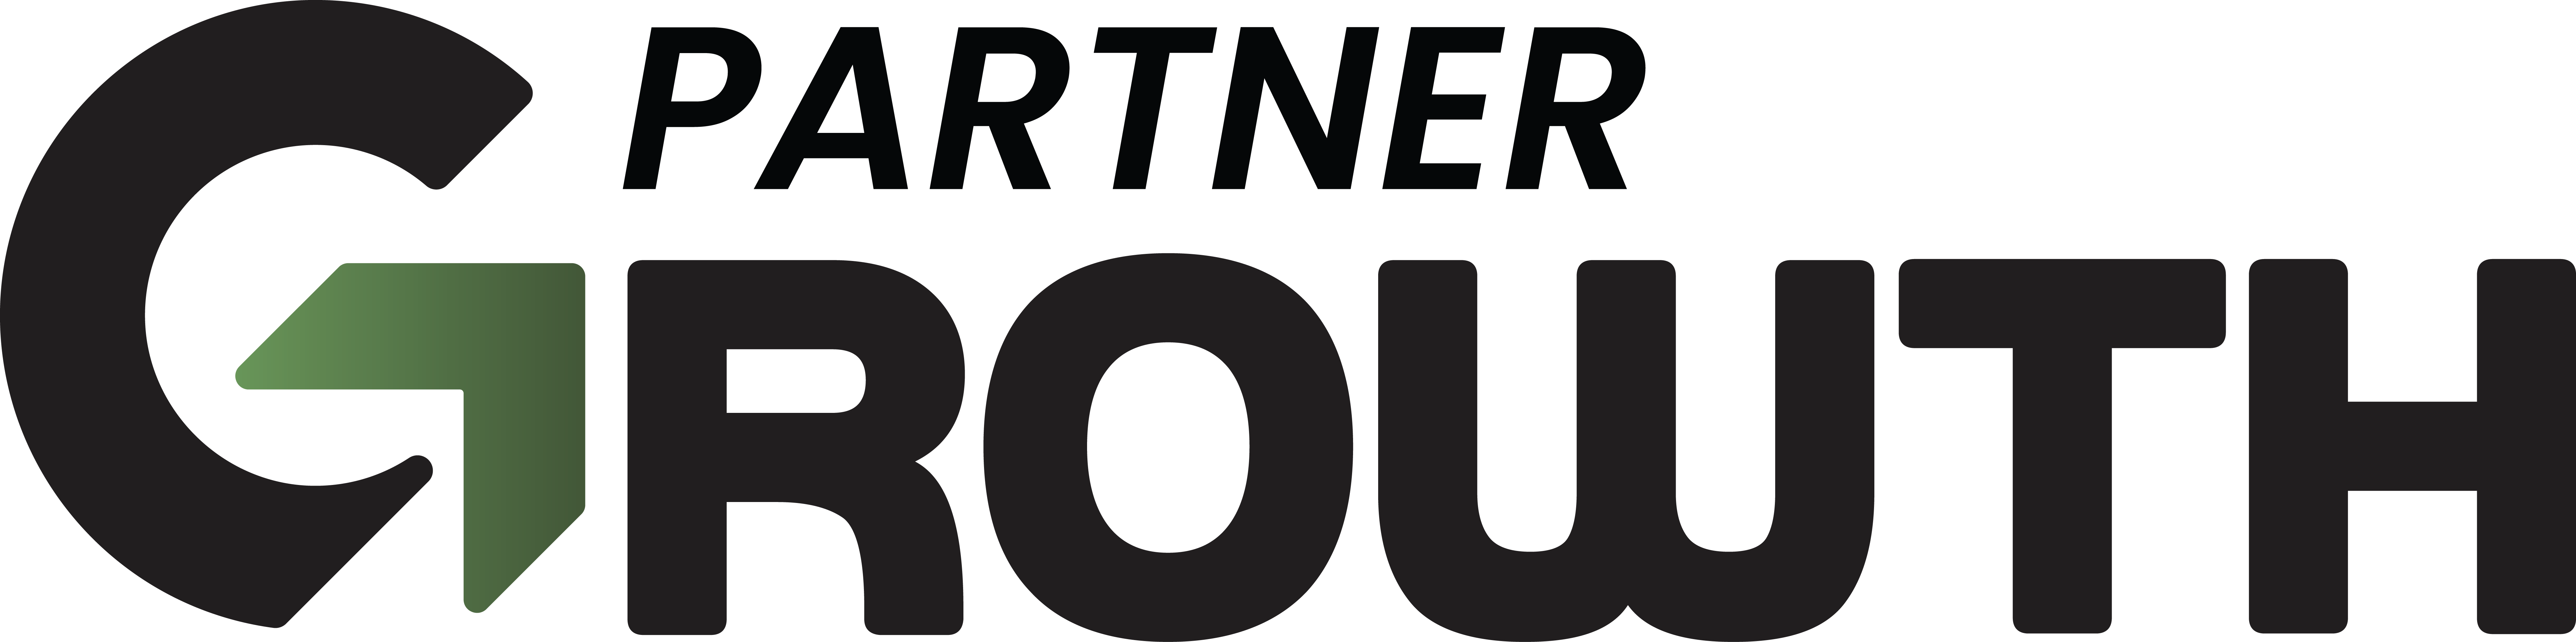 Partner Growth logo